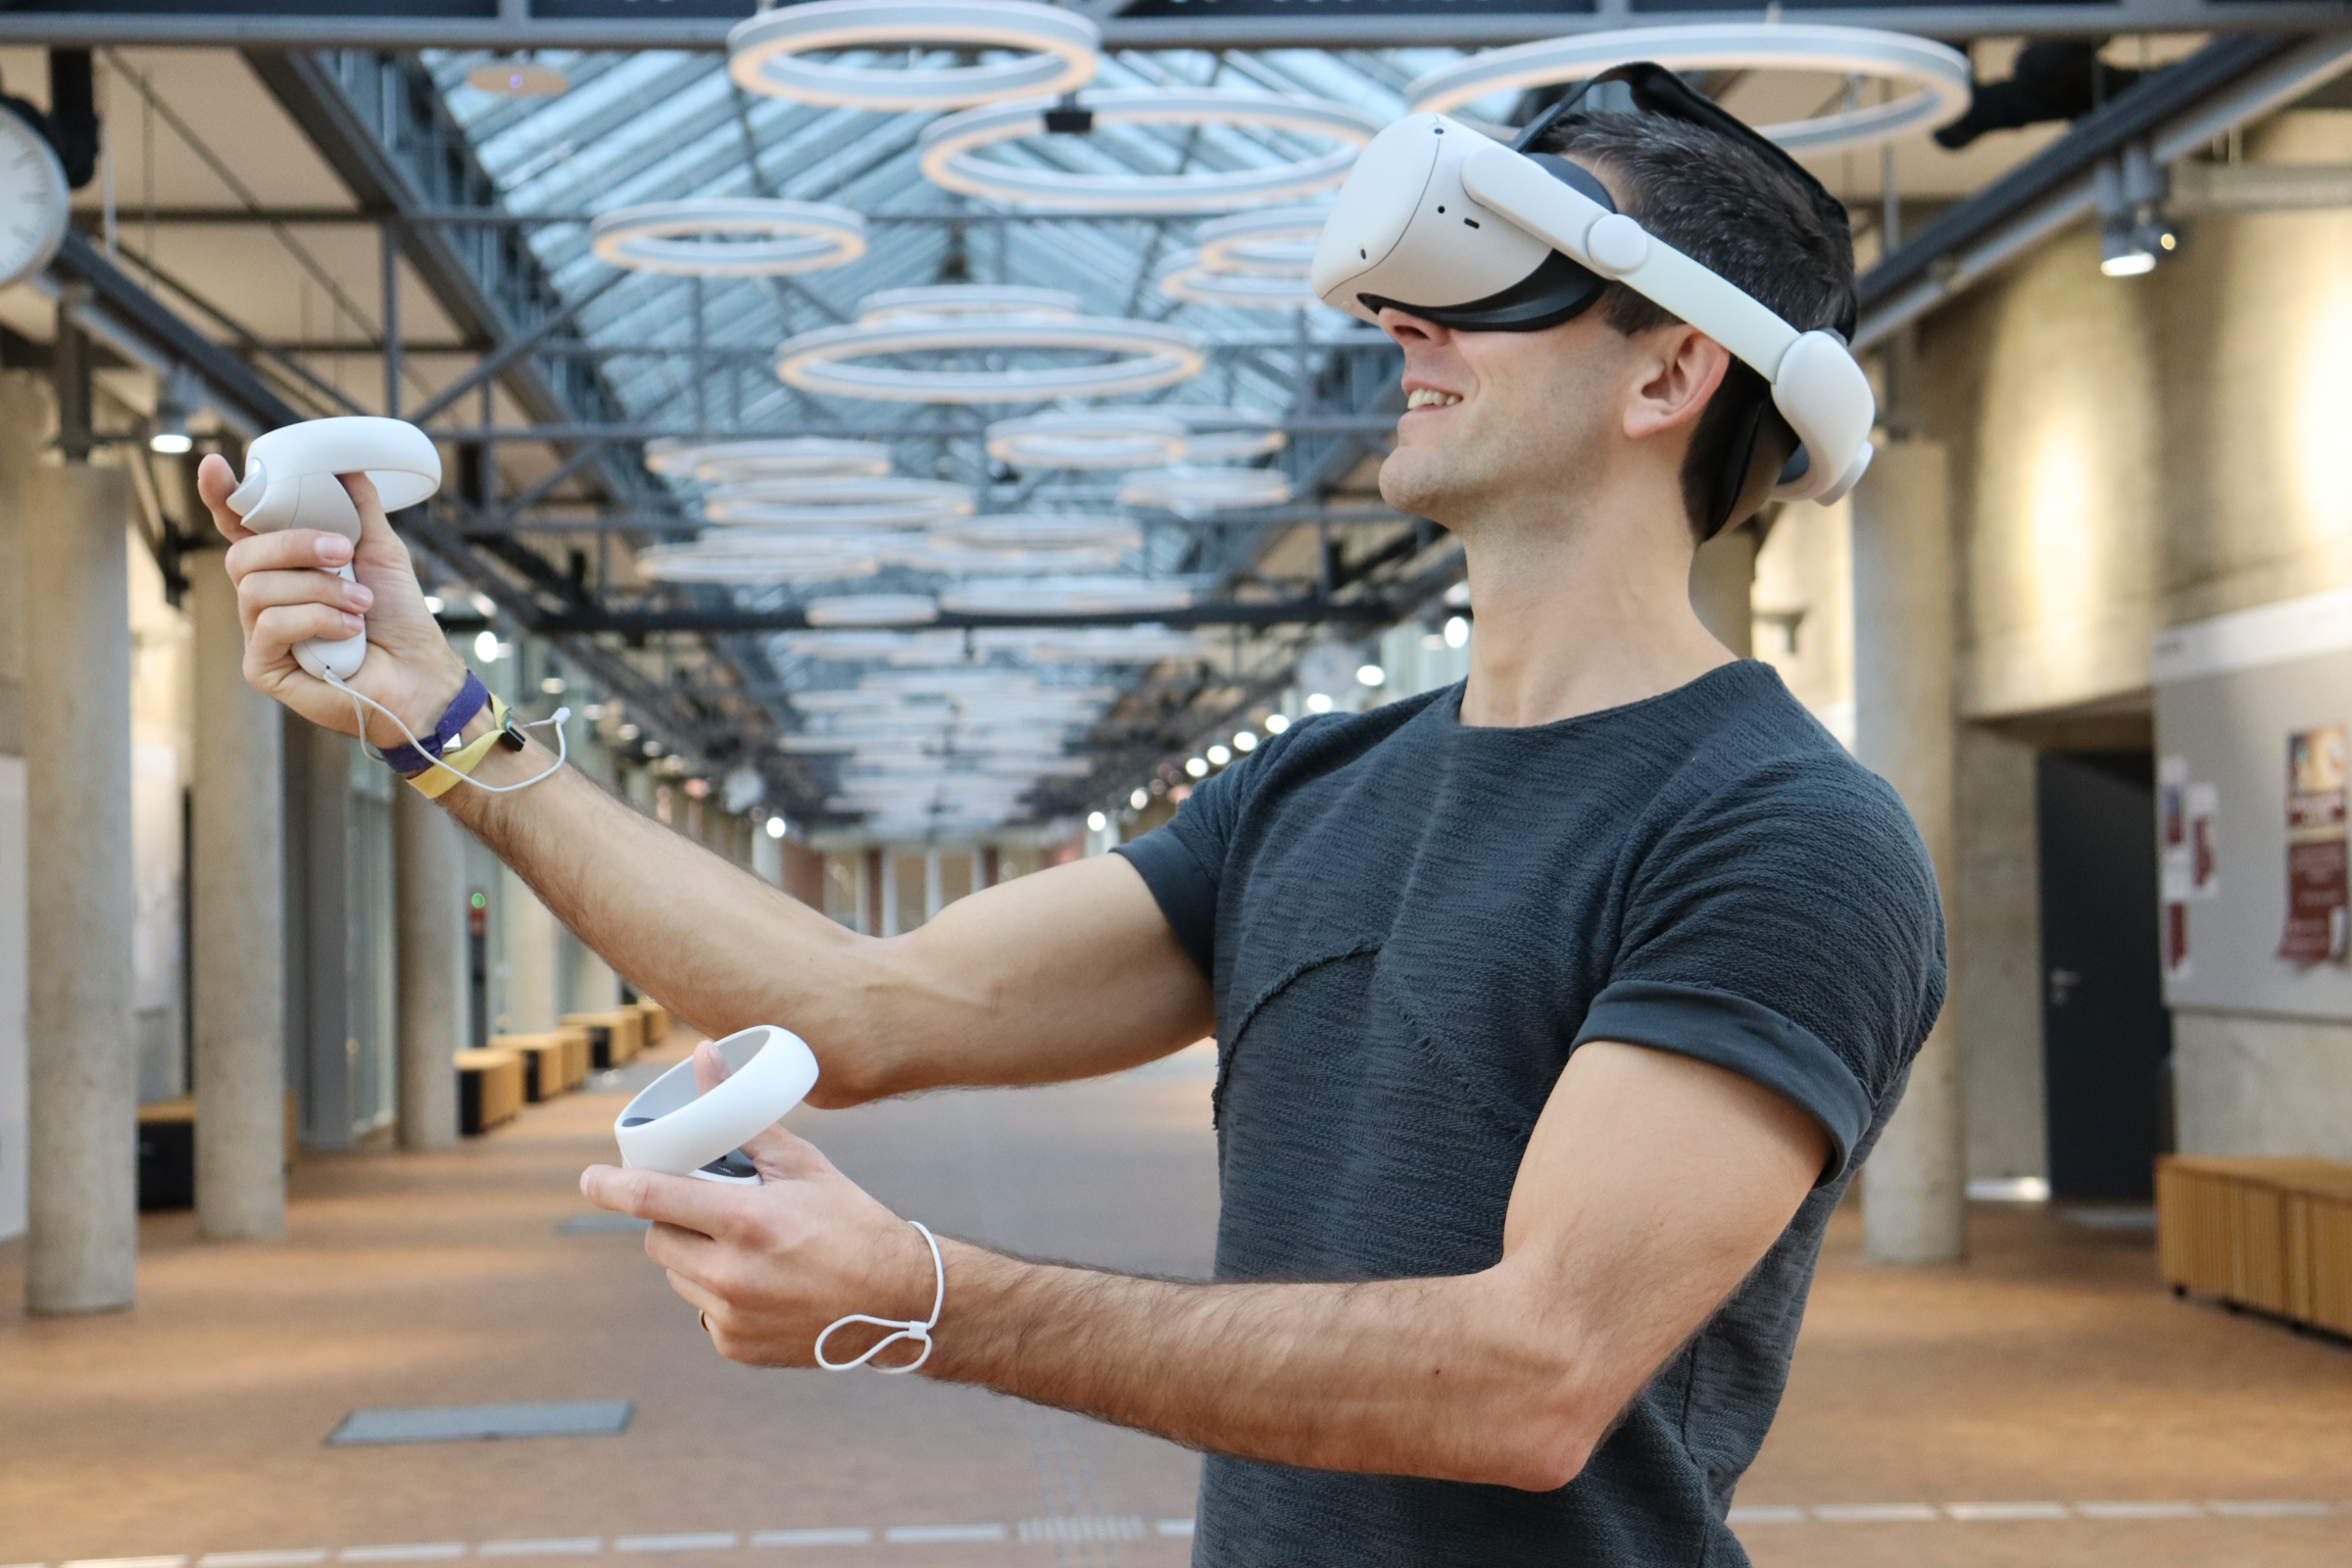 Testing VR-Gear in the auditorium hallway